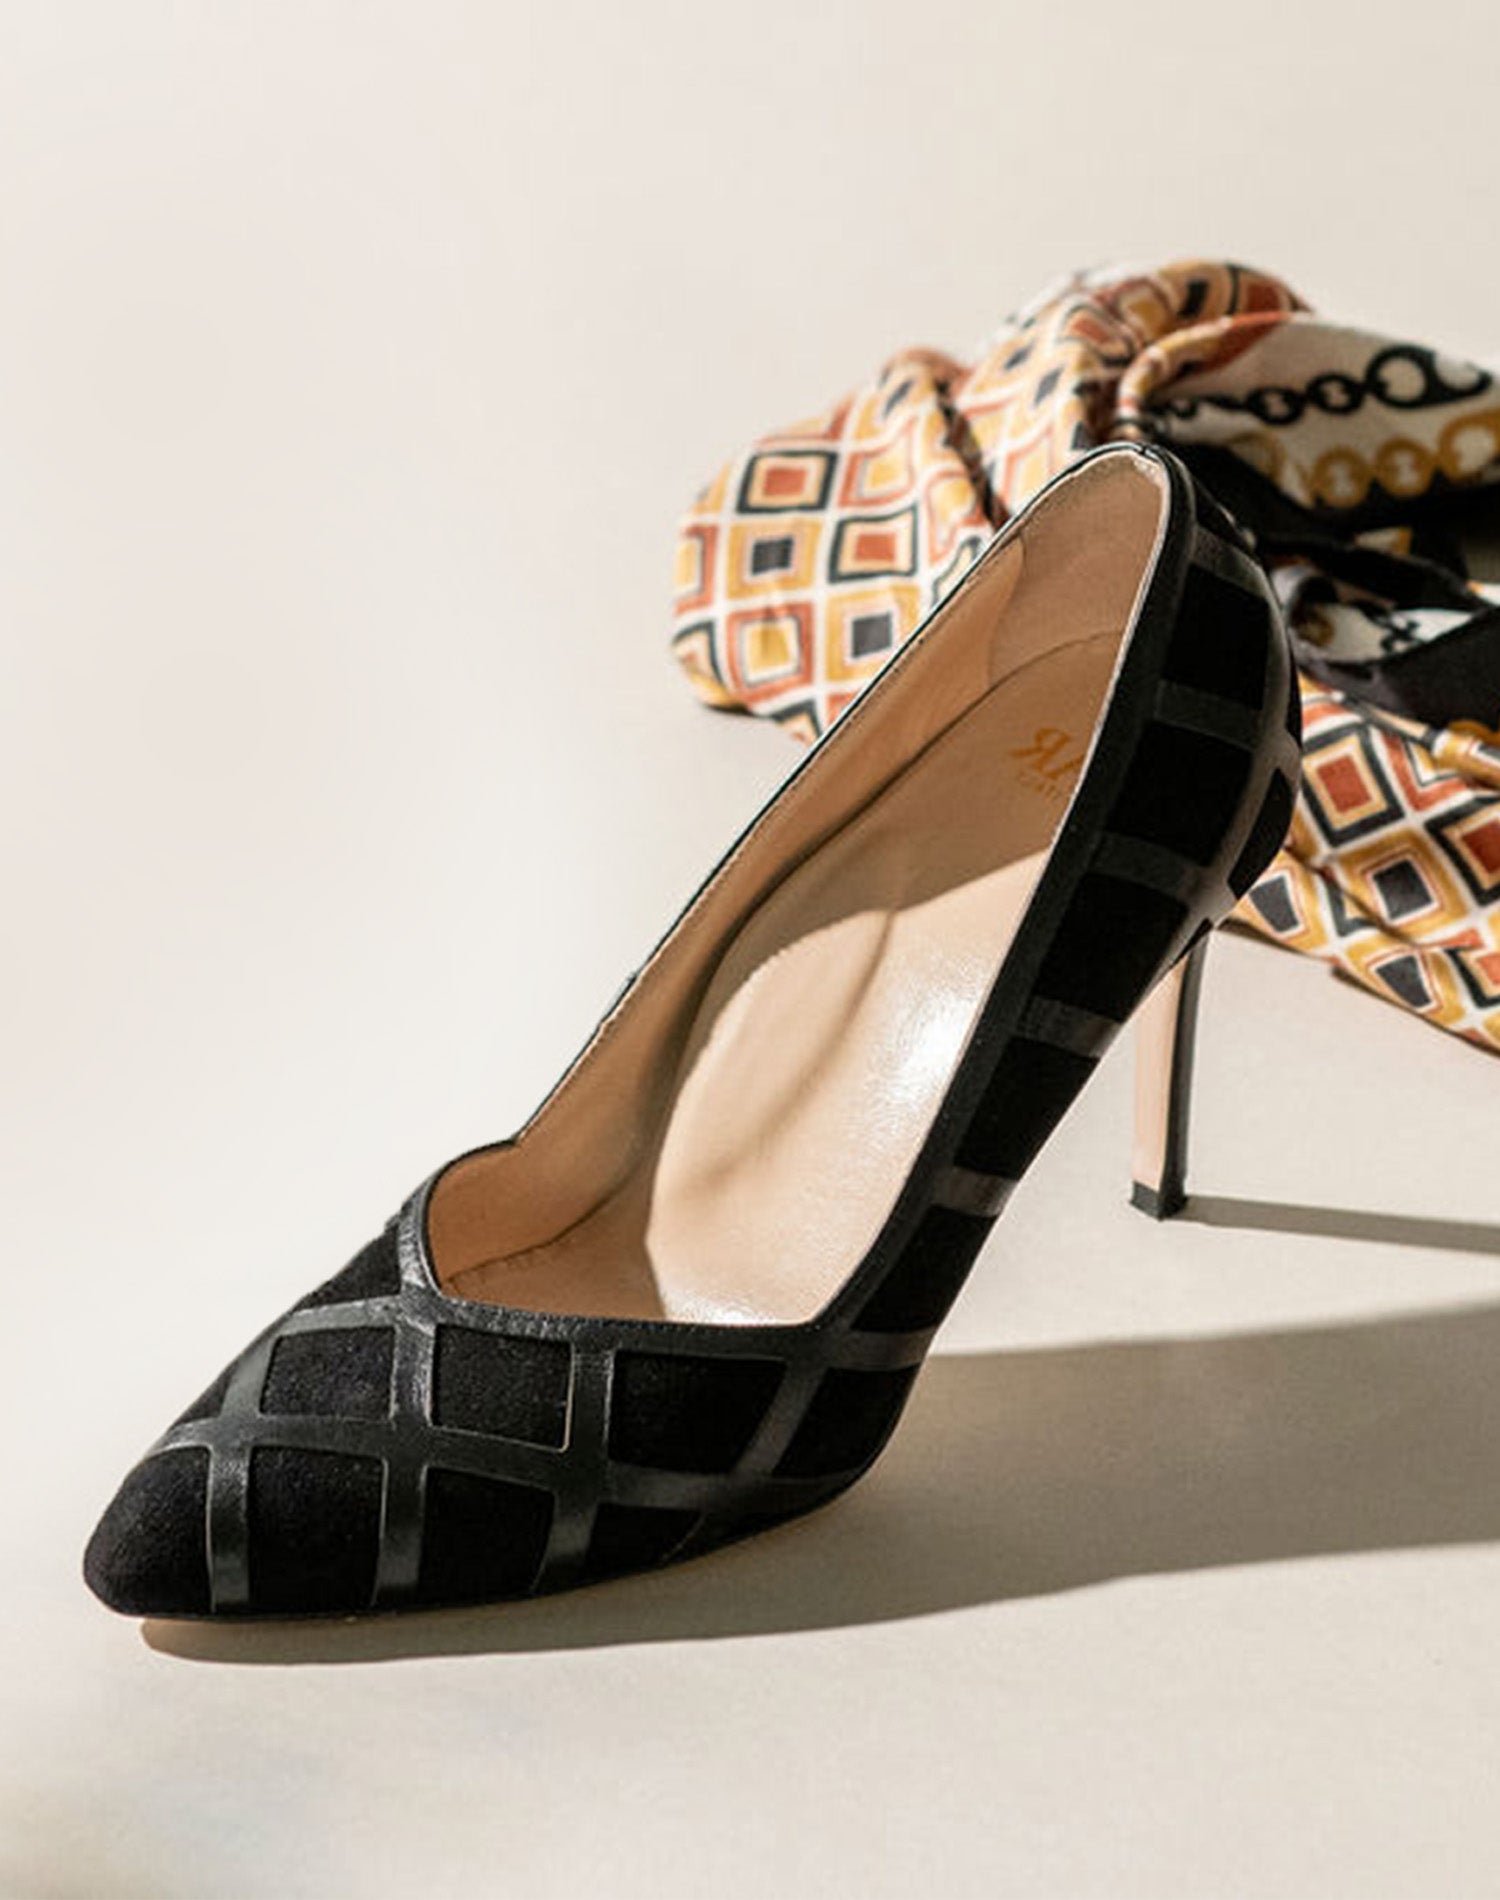 Buy heel sandal for girls under 300 in India @ Limeroad